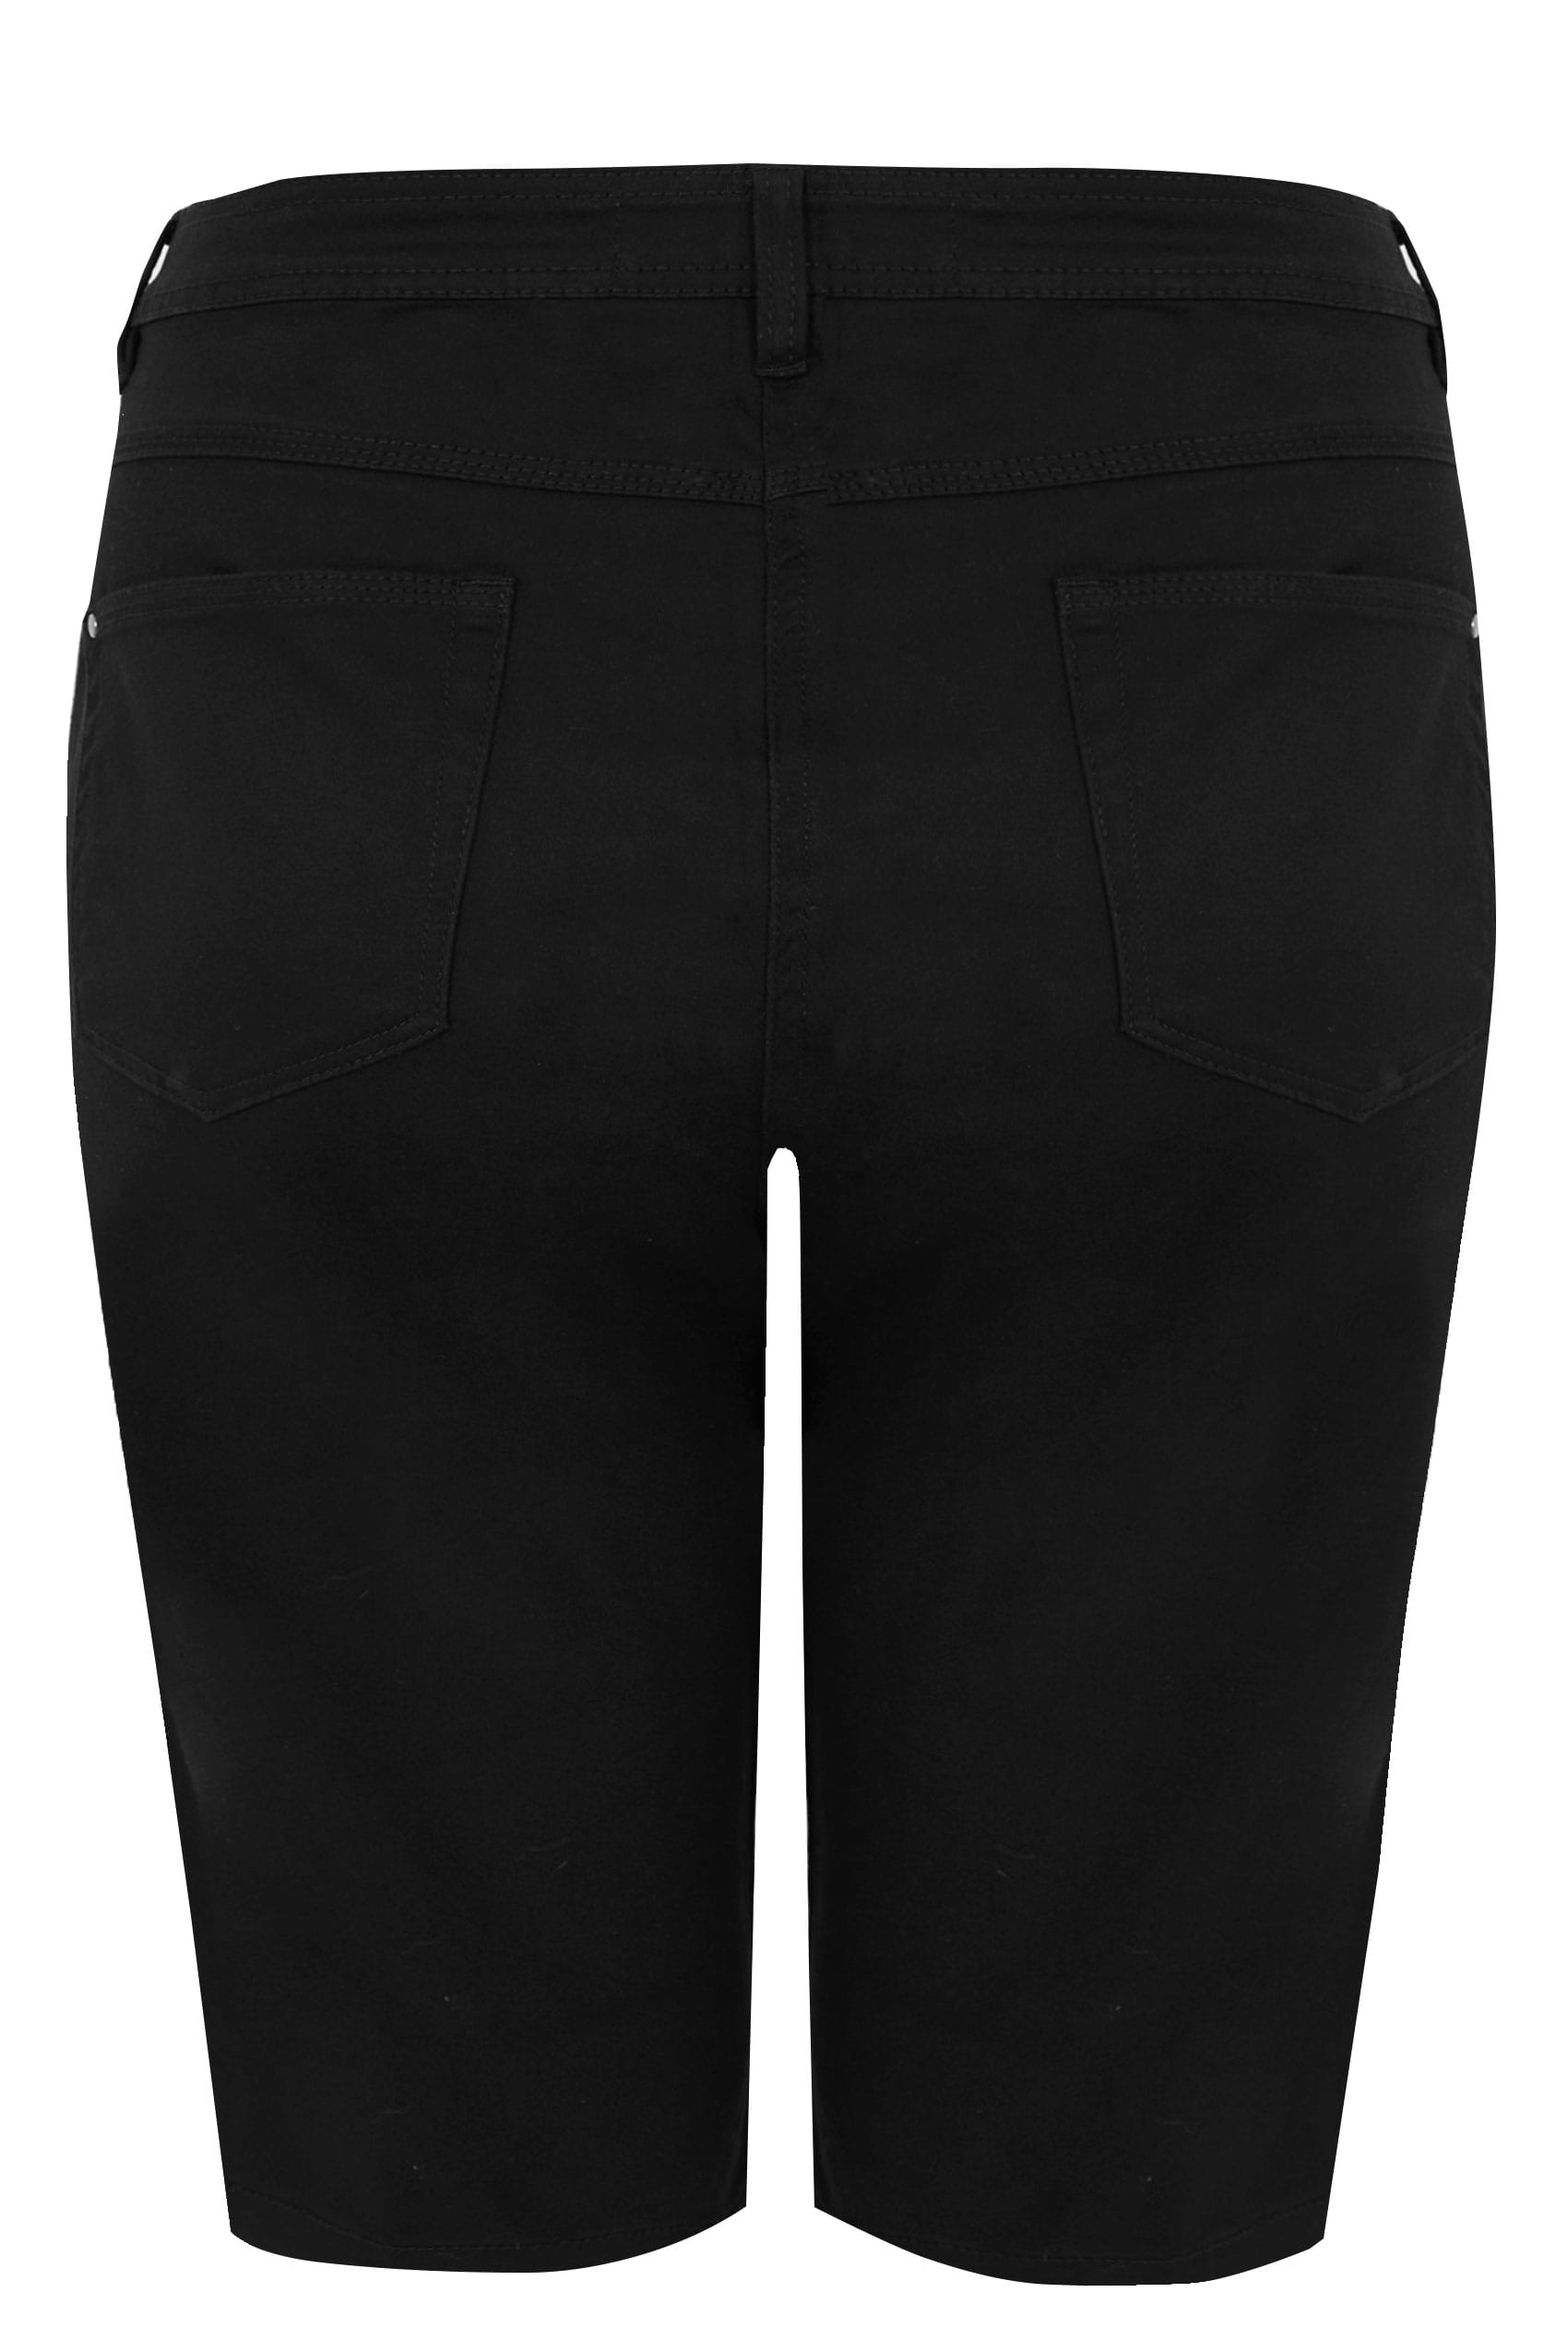 Black Knee Length Shorts, Plus size 16 to 36